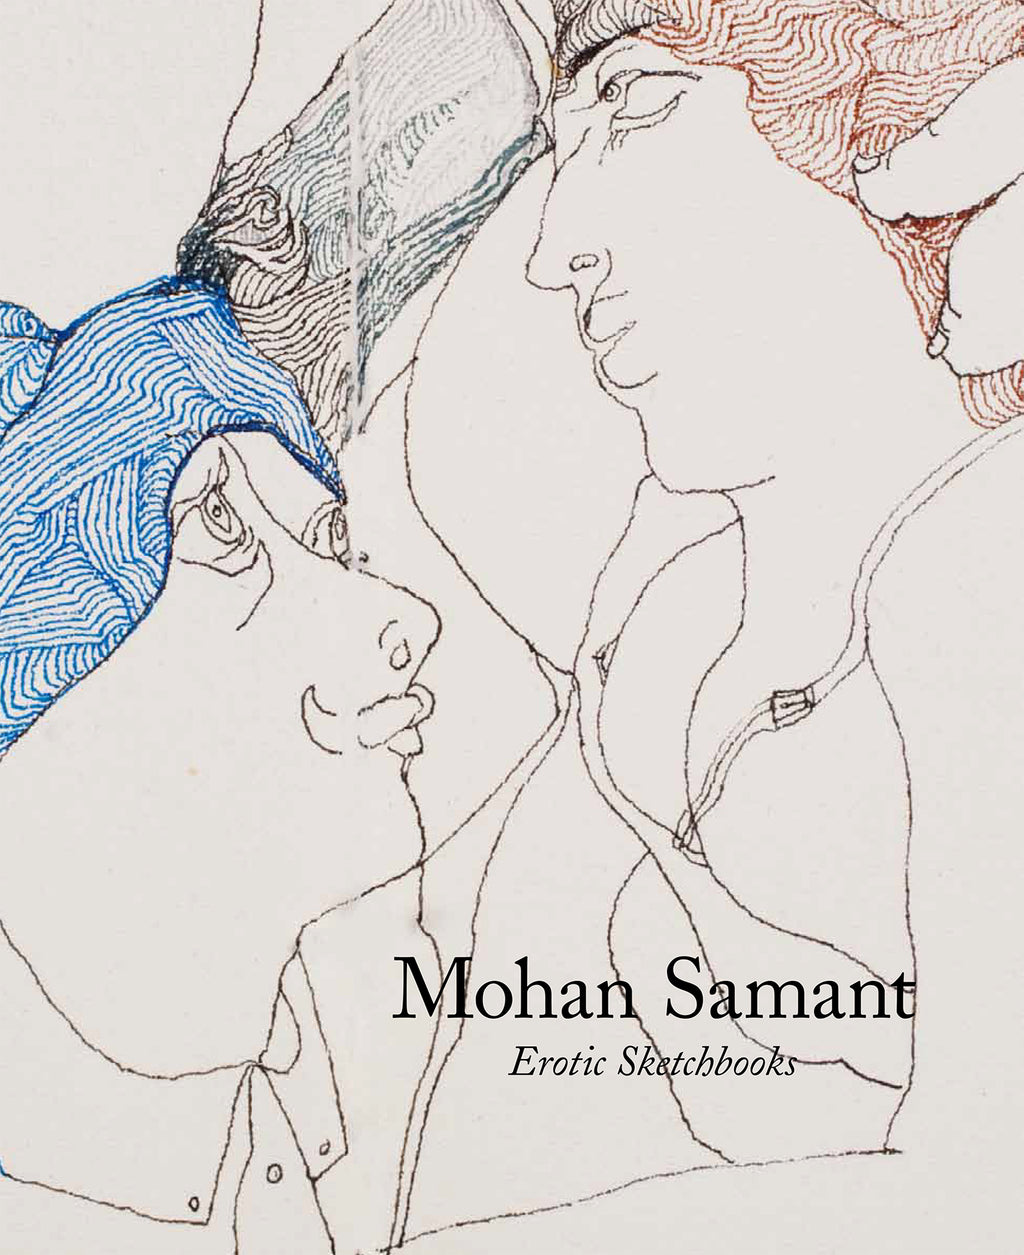 Mohan Samant